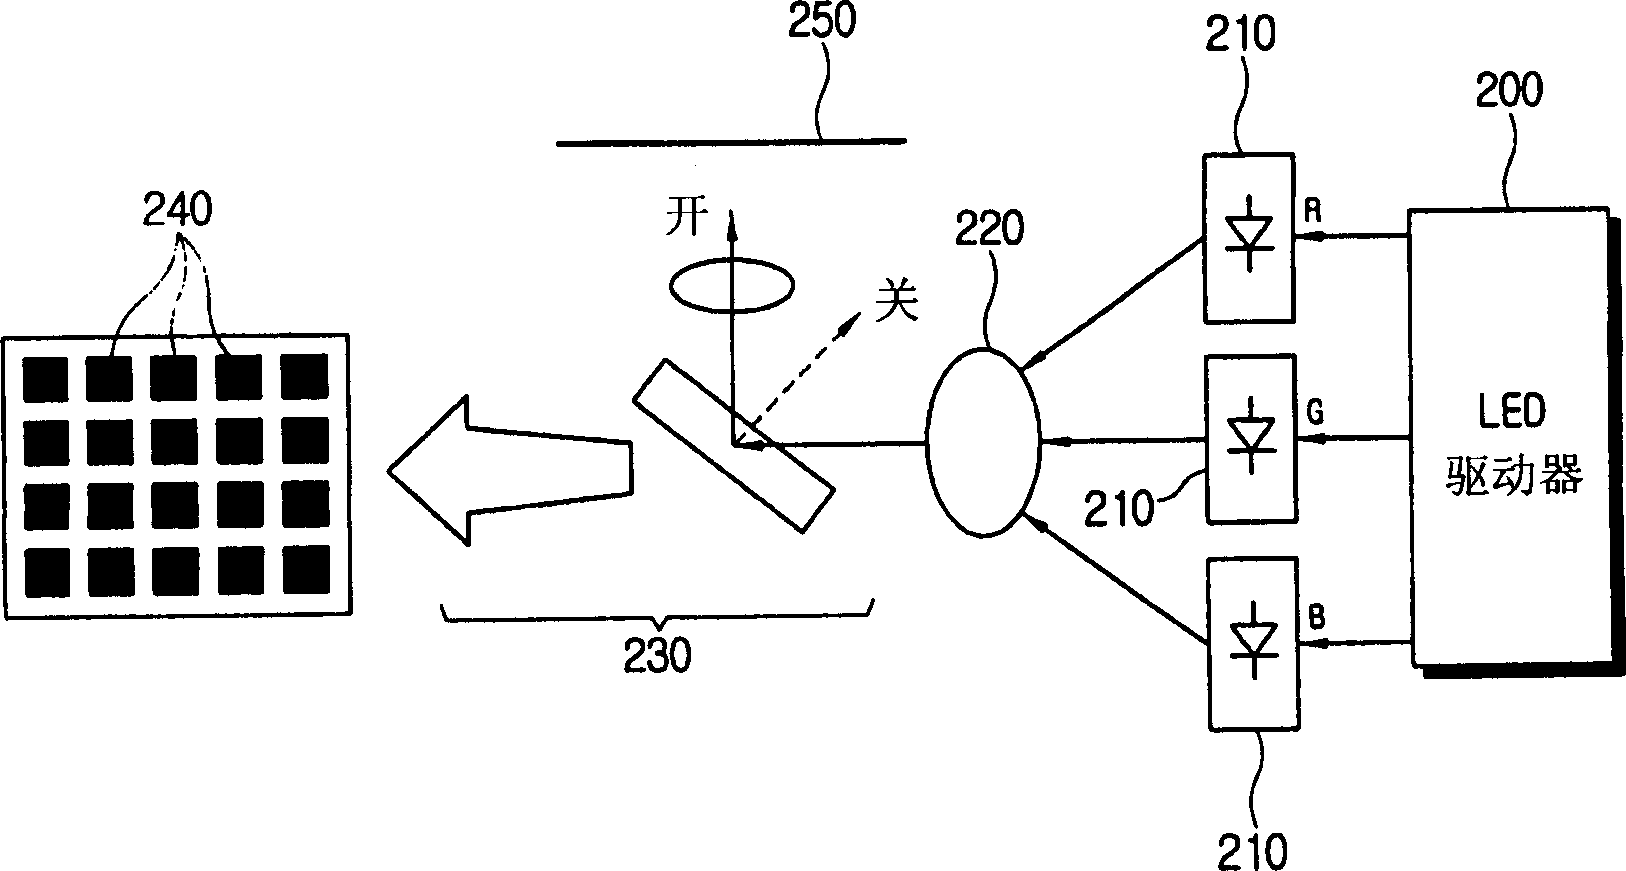 Light emitting diode (led) driver